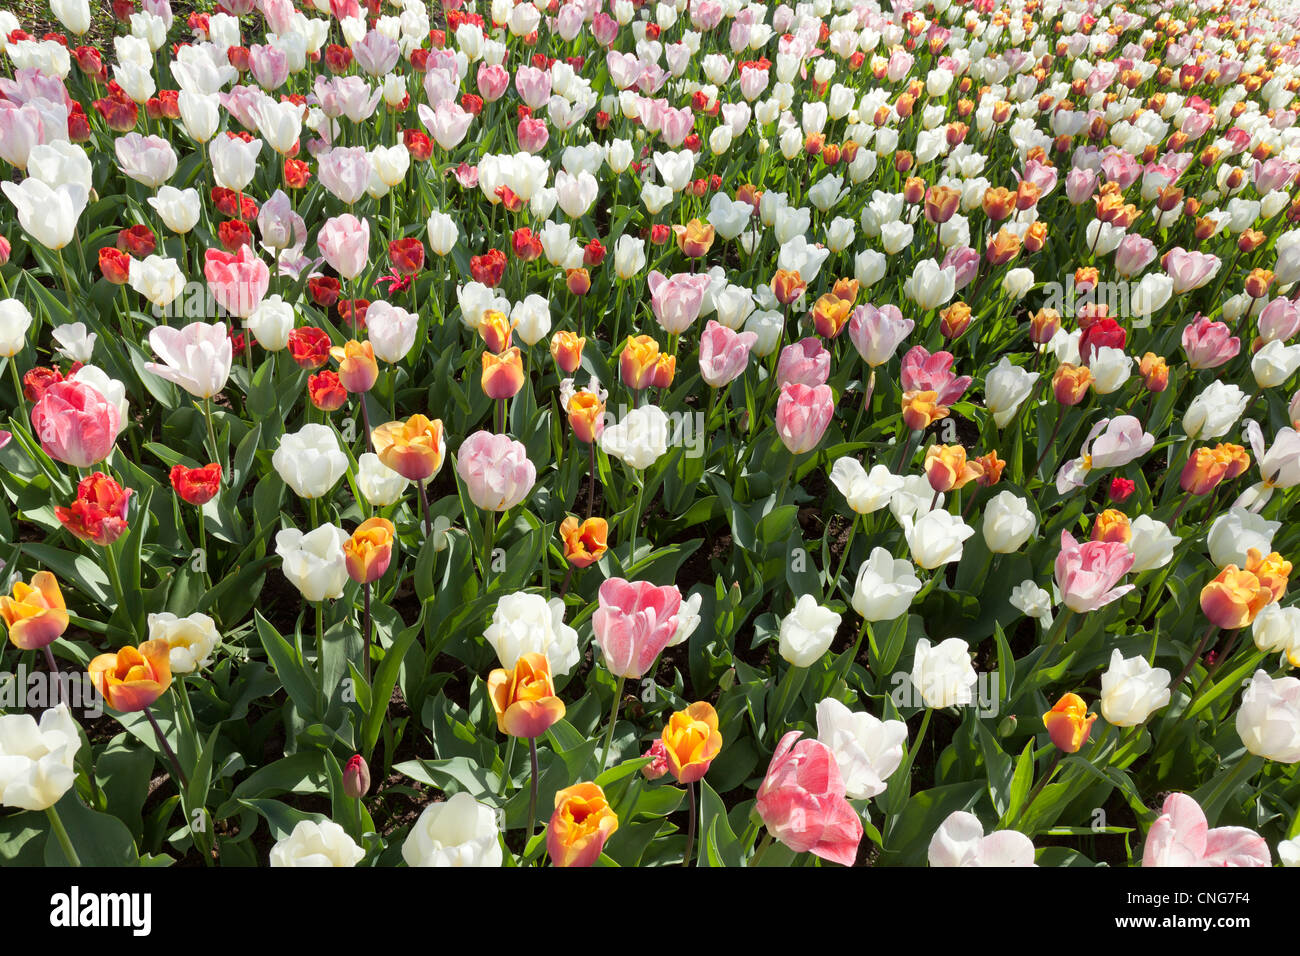 Tulips triumph 'Hemisphere', tulips triumph 'India Summer', tulips fosteriana 'Flaming Purissima', tulips fosteriana 'Purissima' Stock Photo